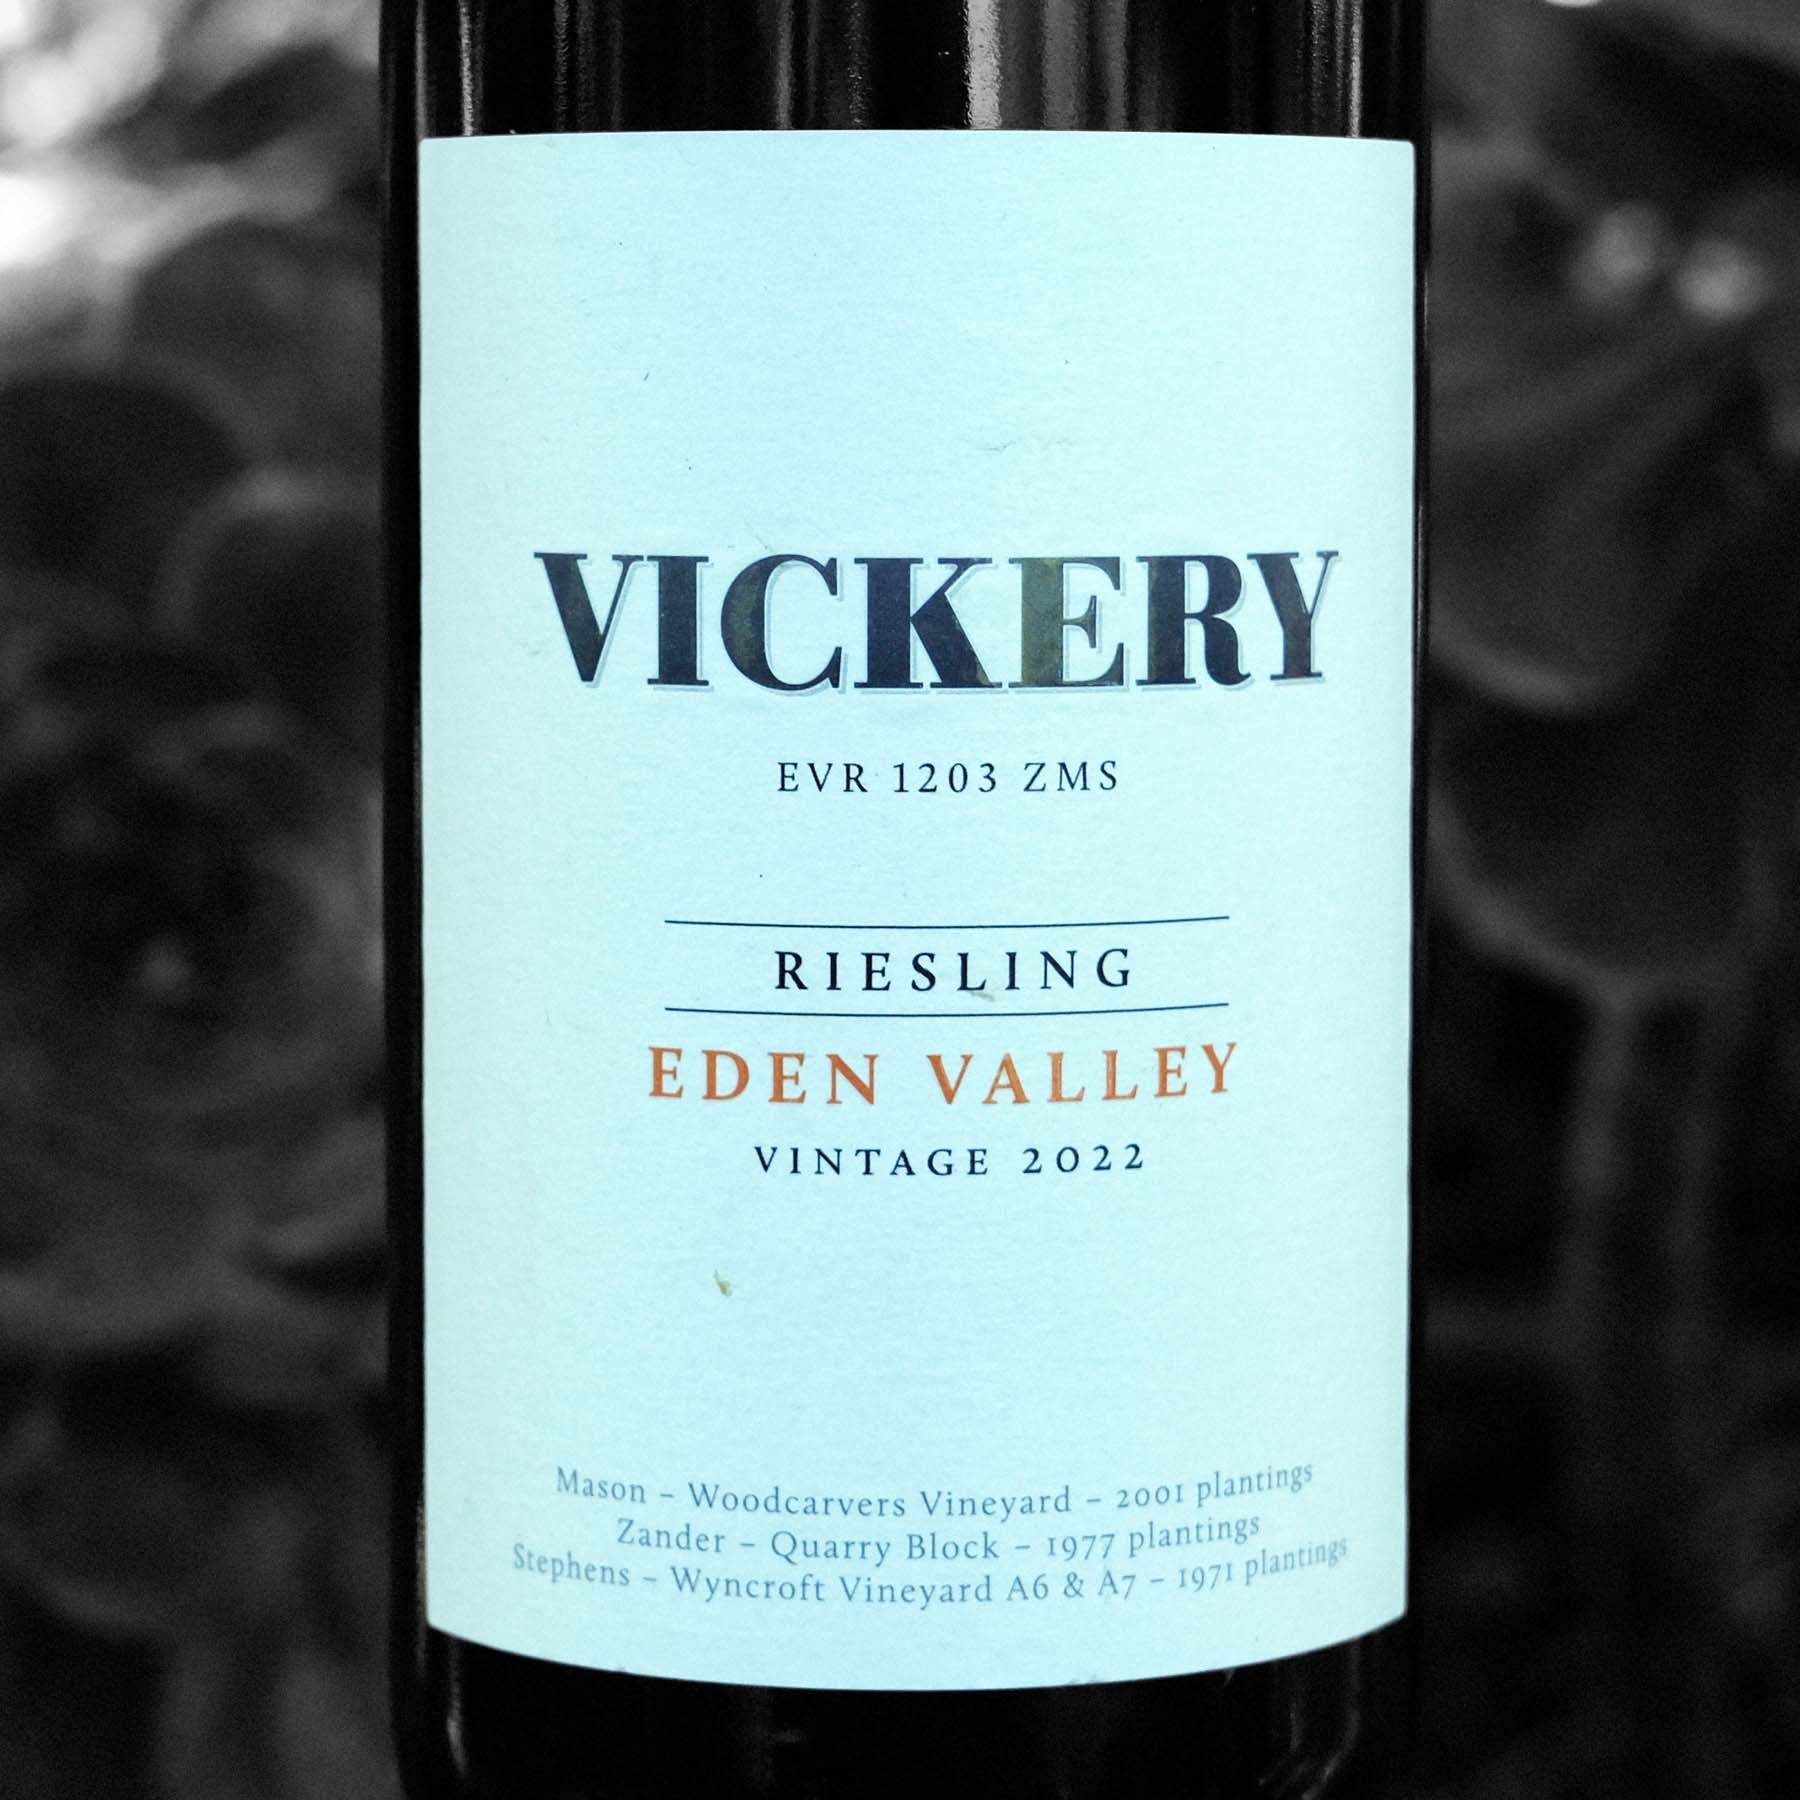 Vickery Riesling EVR 1203 ZMS 2022 Eden Valley, SA